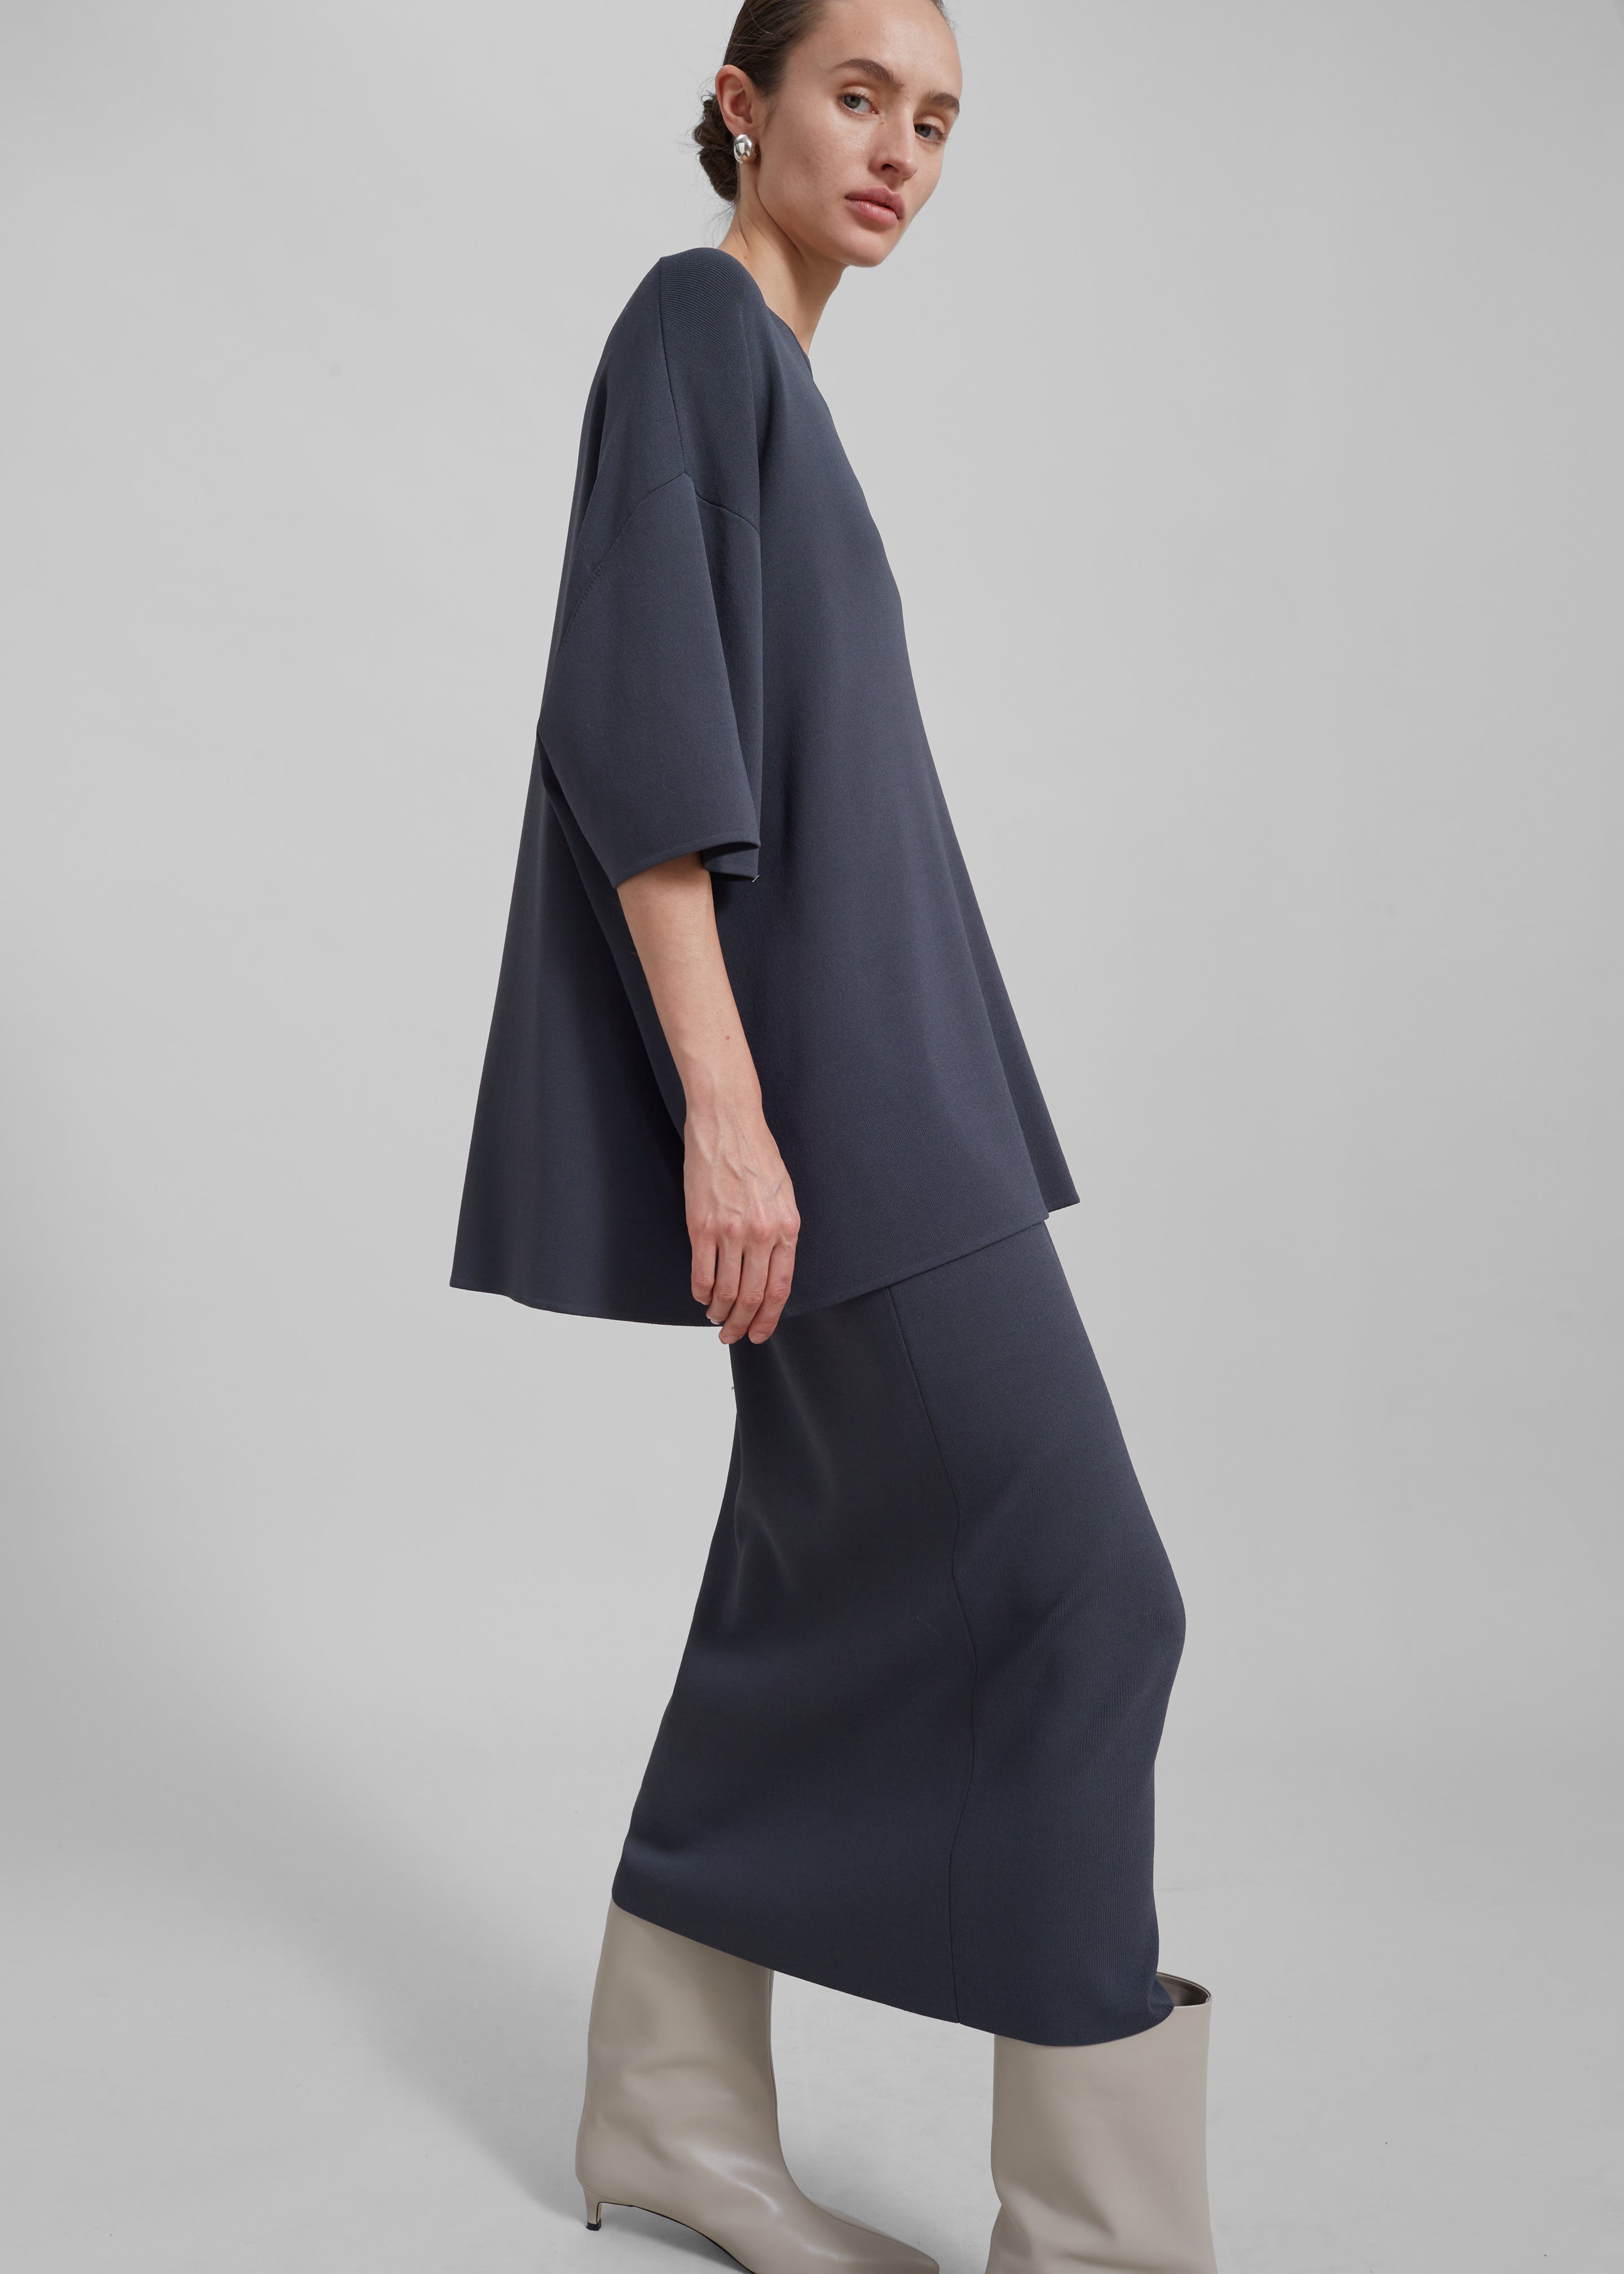 Solange Knit Pencil Skirt - Grey - 1